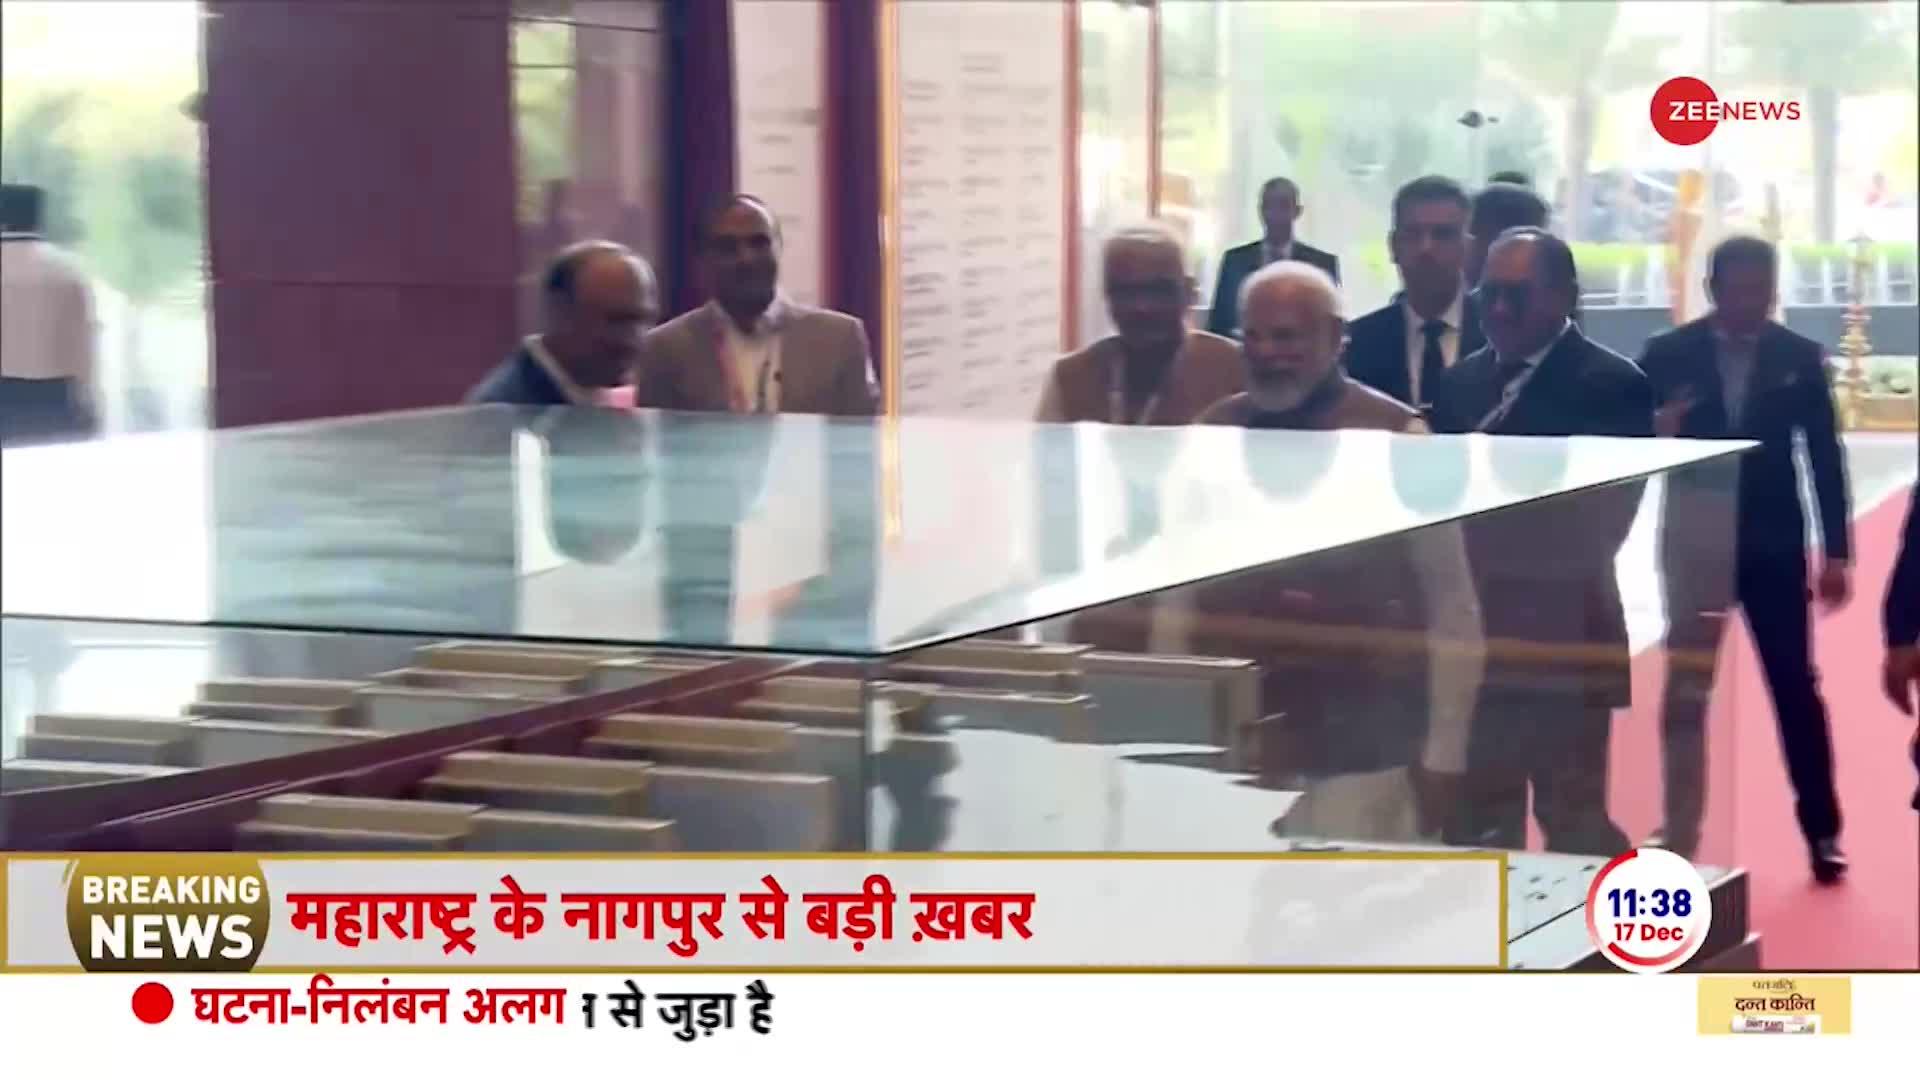 Pm Modi Surar Visit: प्रधानमंत्री नरेंद्र मोदी ने सूरत डायमंड बोर्स का किया उद्धाटन